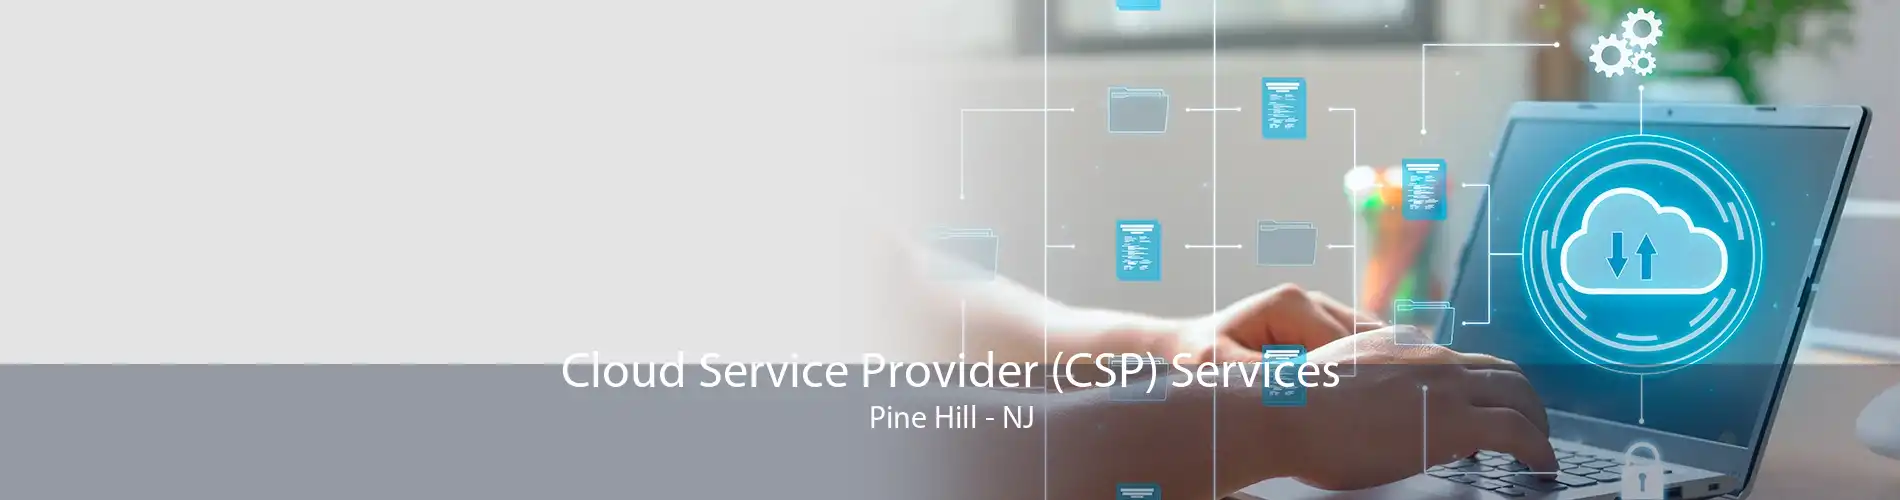 Cloud Service Provider (CSP) Services Pine Hill - NJ